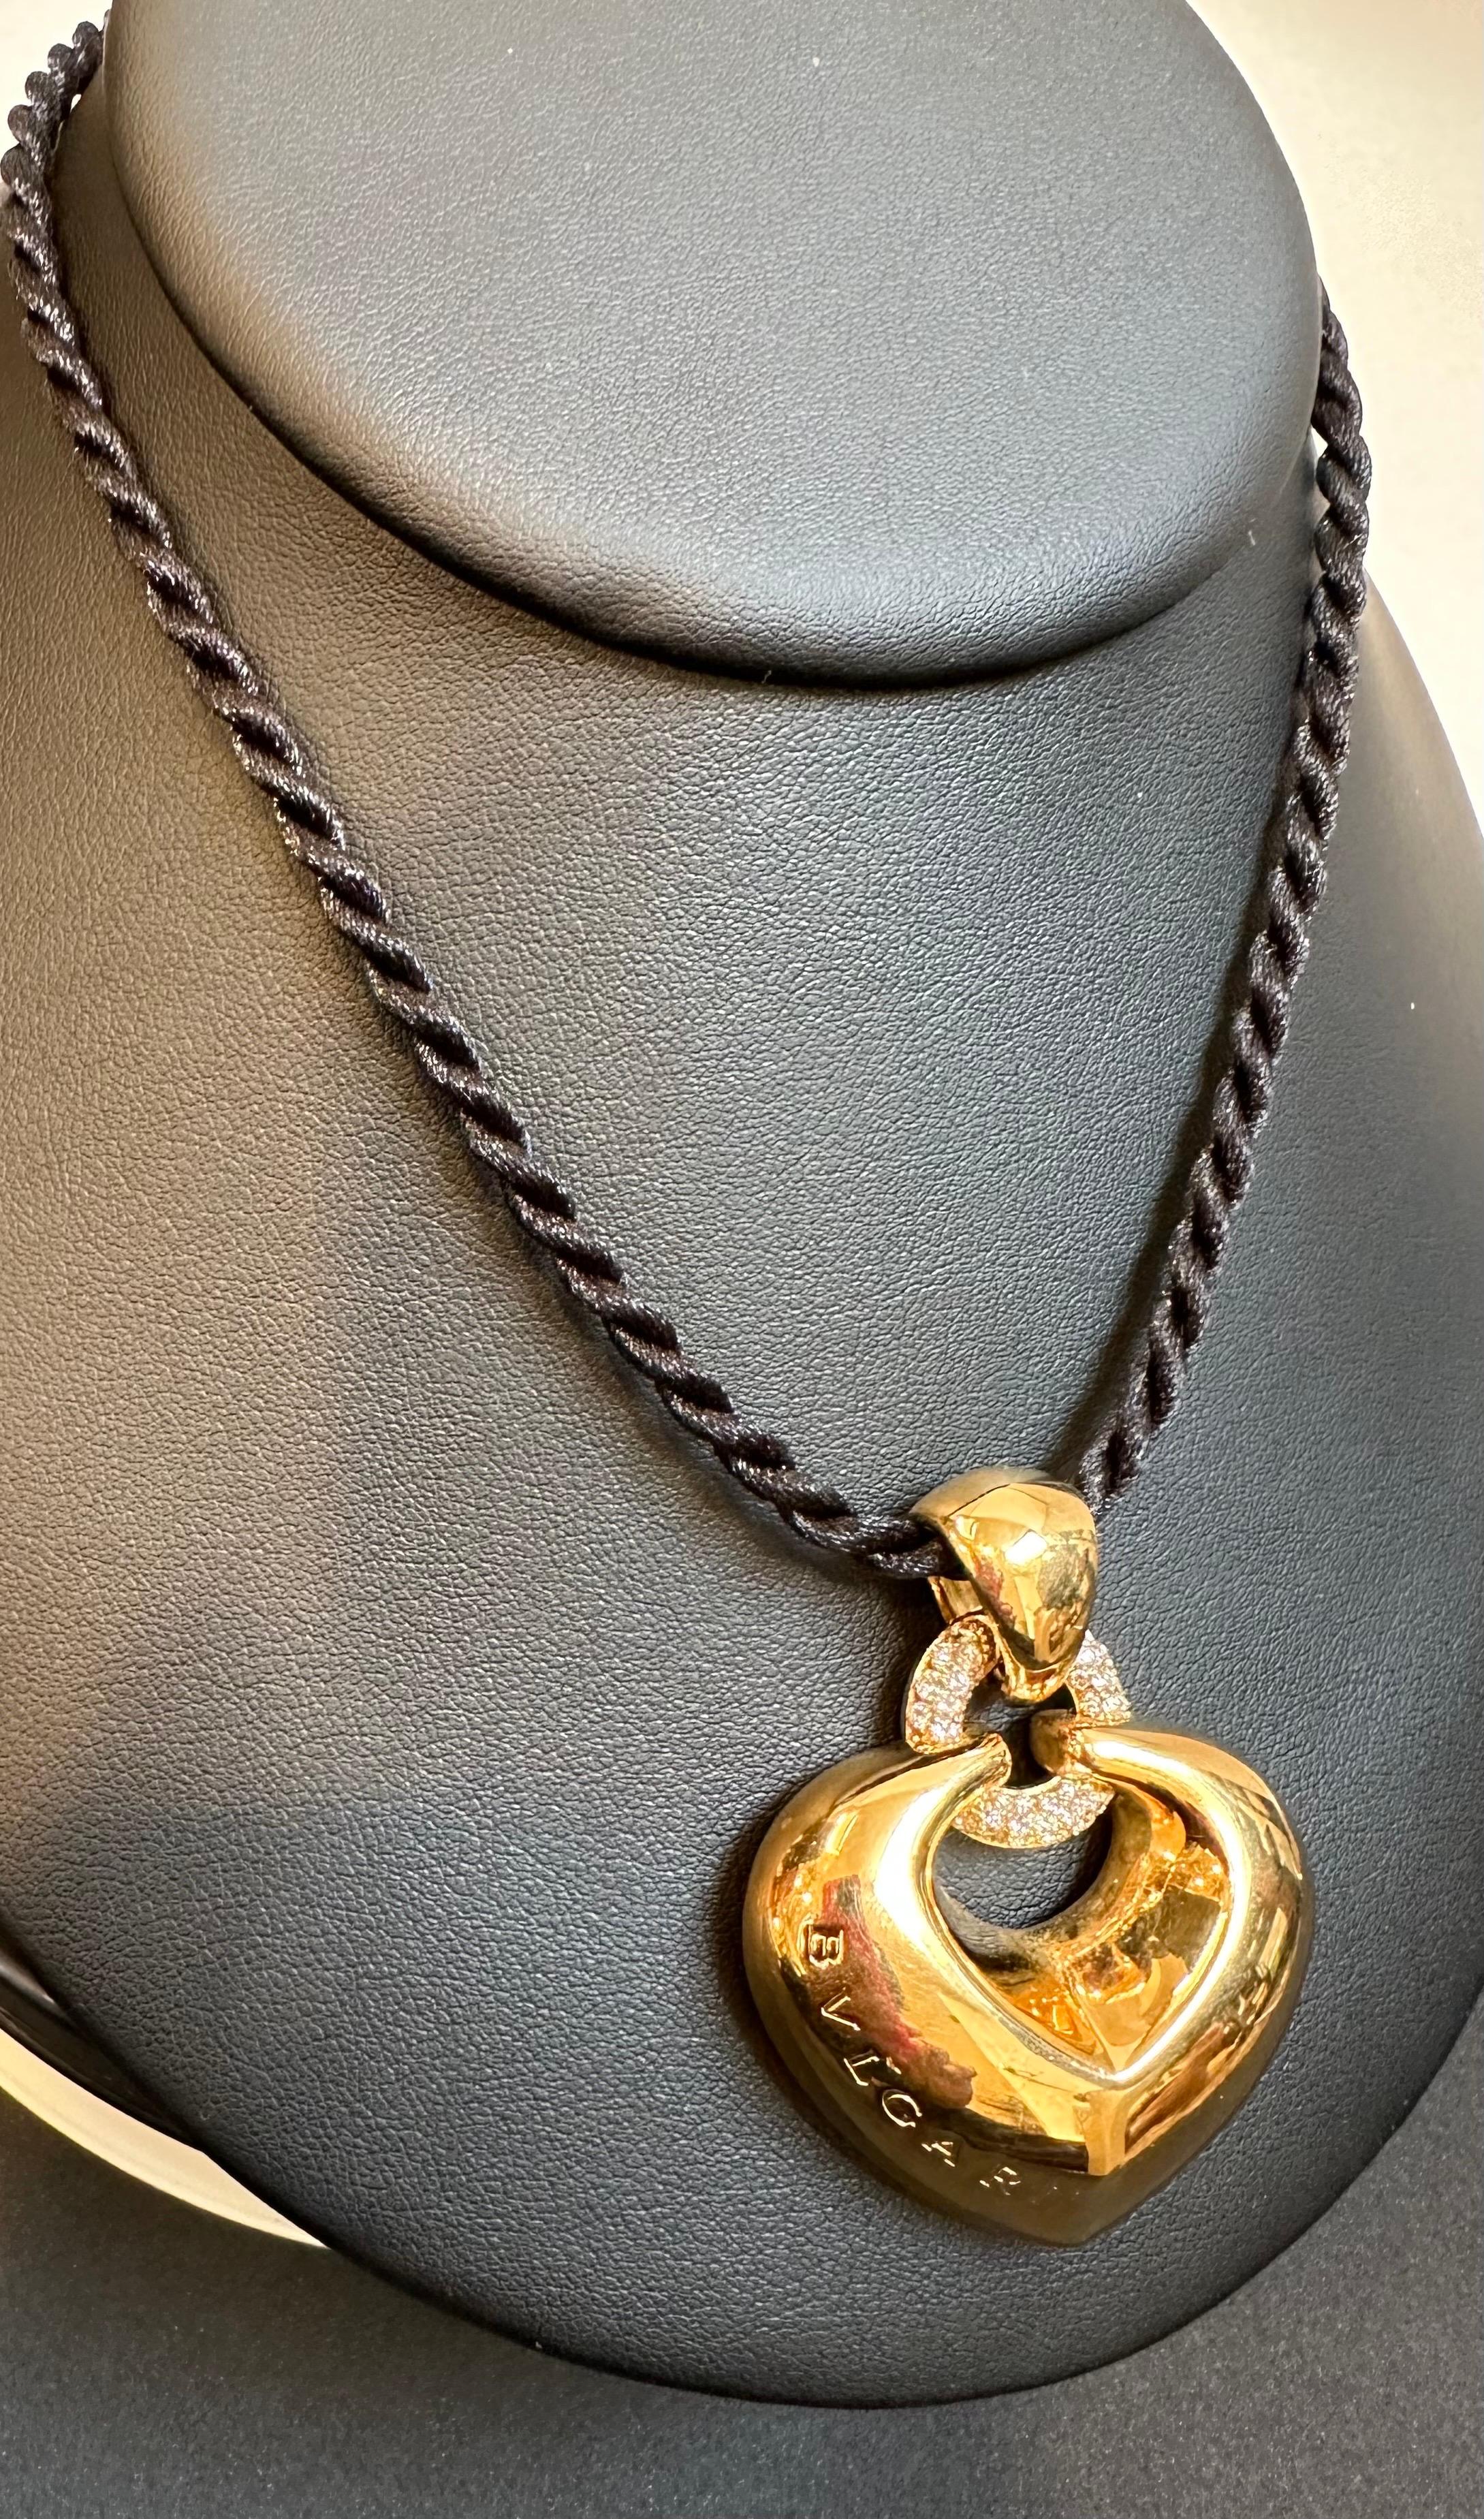 Bulgari 'Doppio Cuore' Gold and Diamond Puffed Heart Pendant on the Leather Cord 1